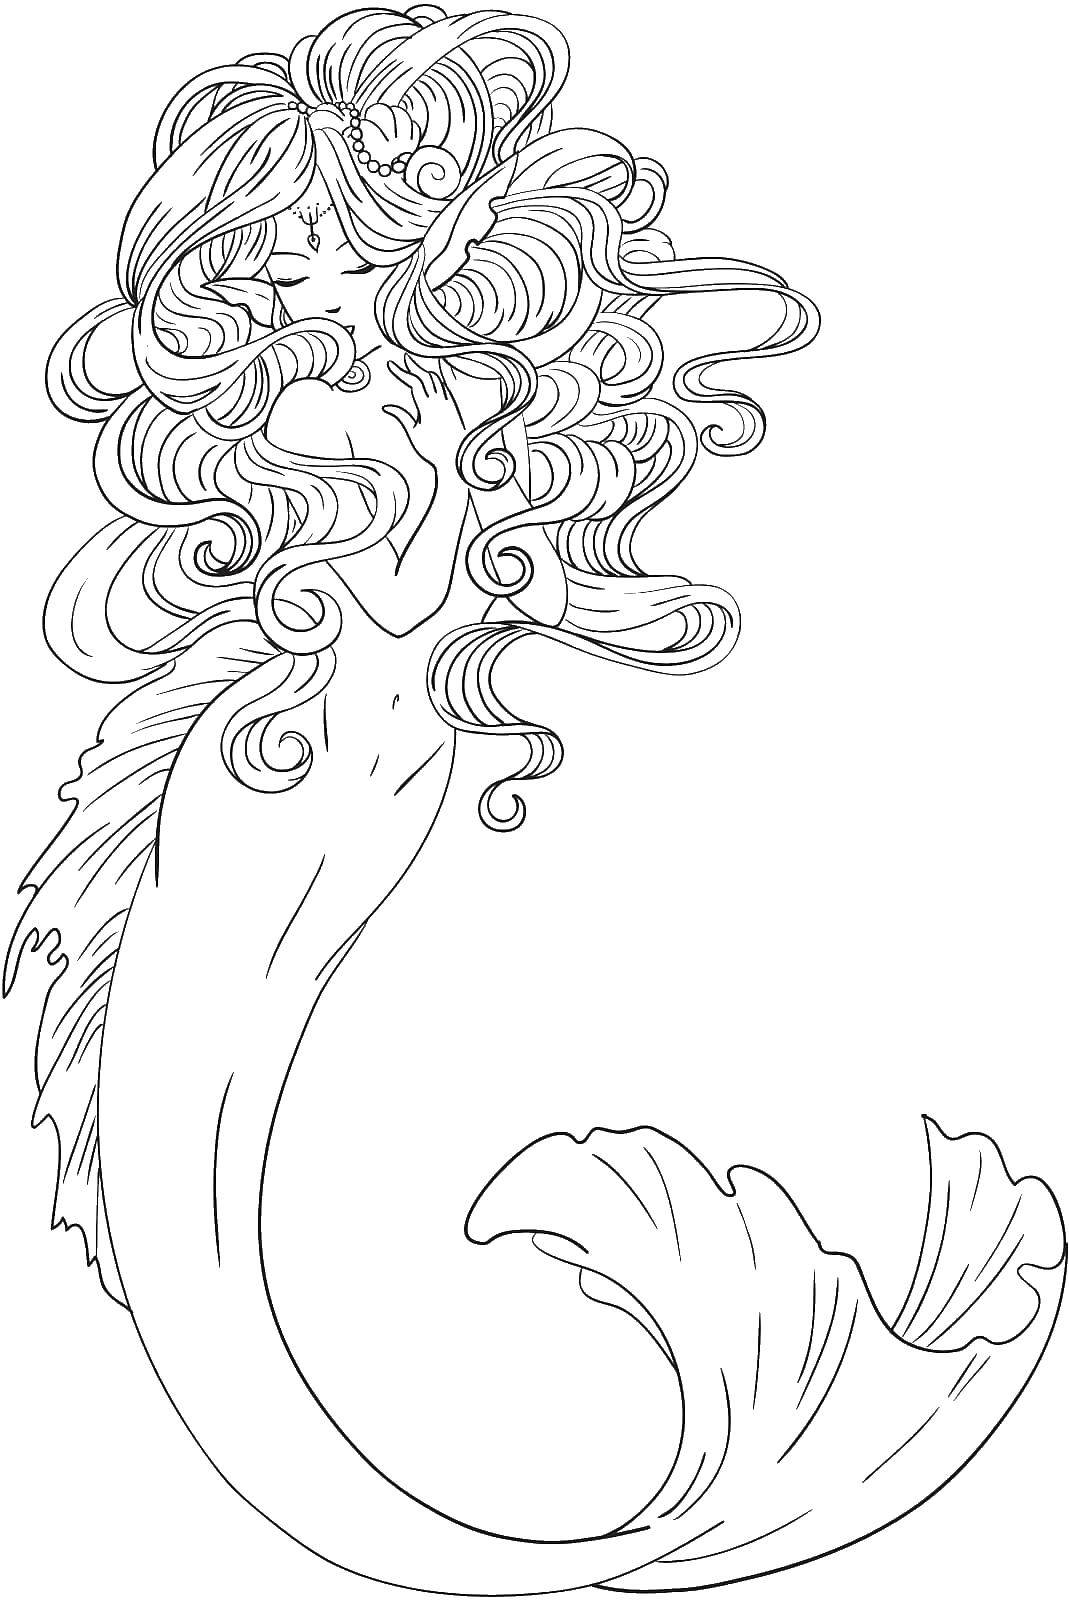 Coloring Beautiful mermaid. Category The little mermaid. Tags:  mermaid, sea, tail.